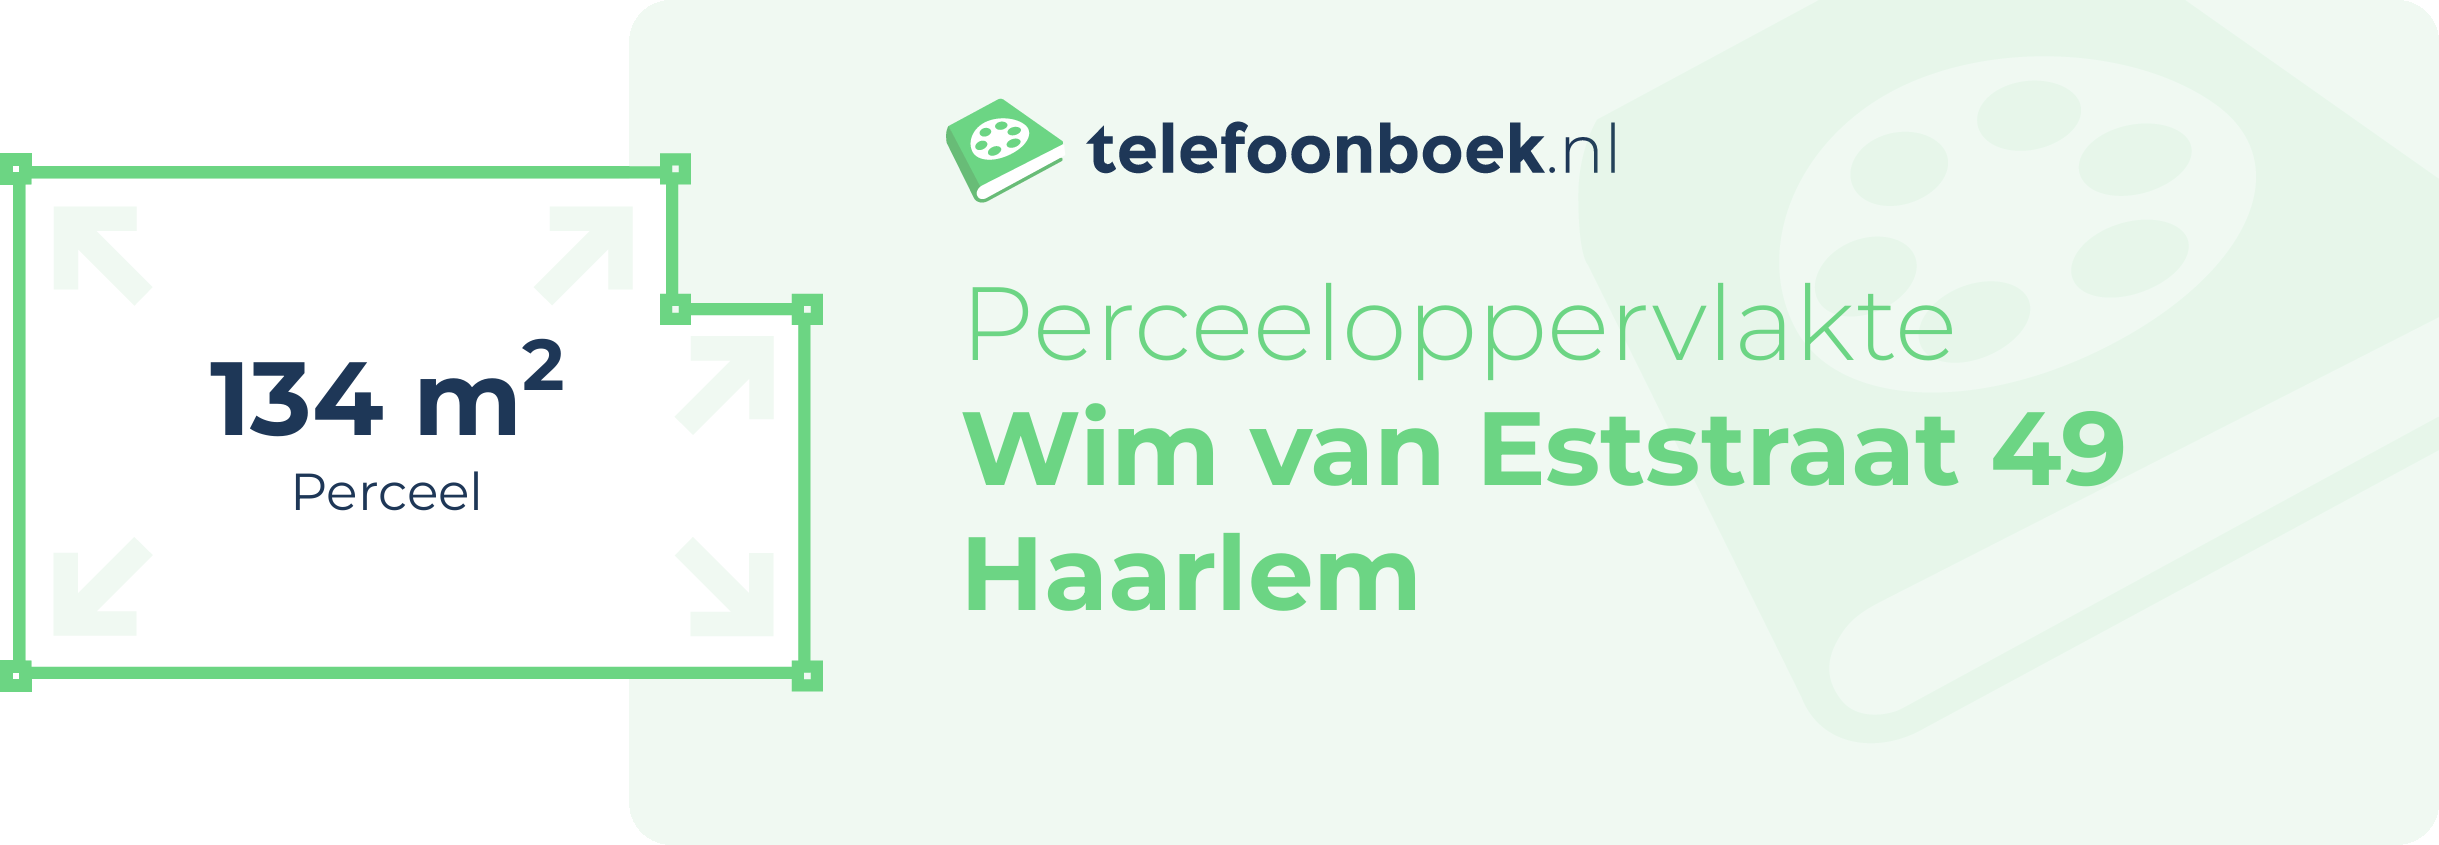 Perceeloppervlakte Wim Van Eststraat 49 Haarlem